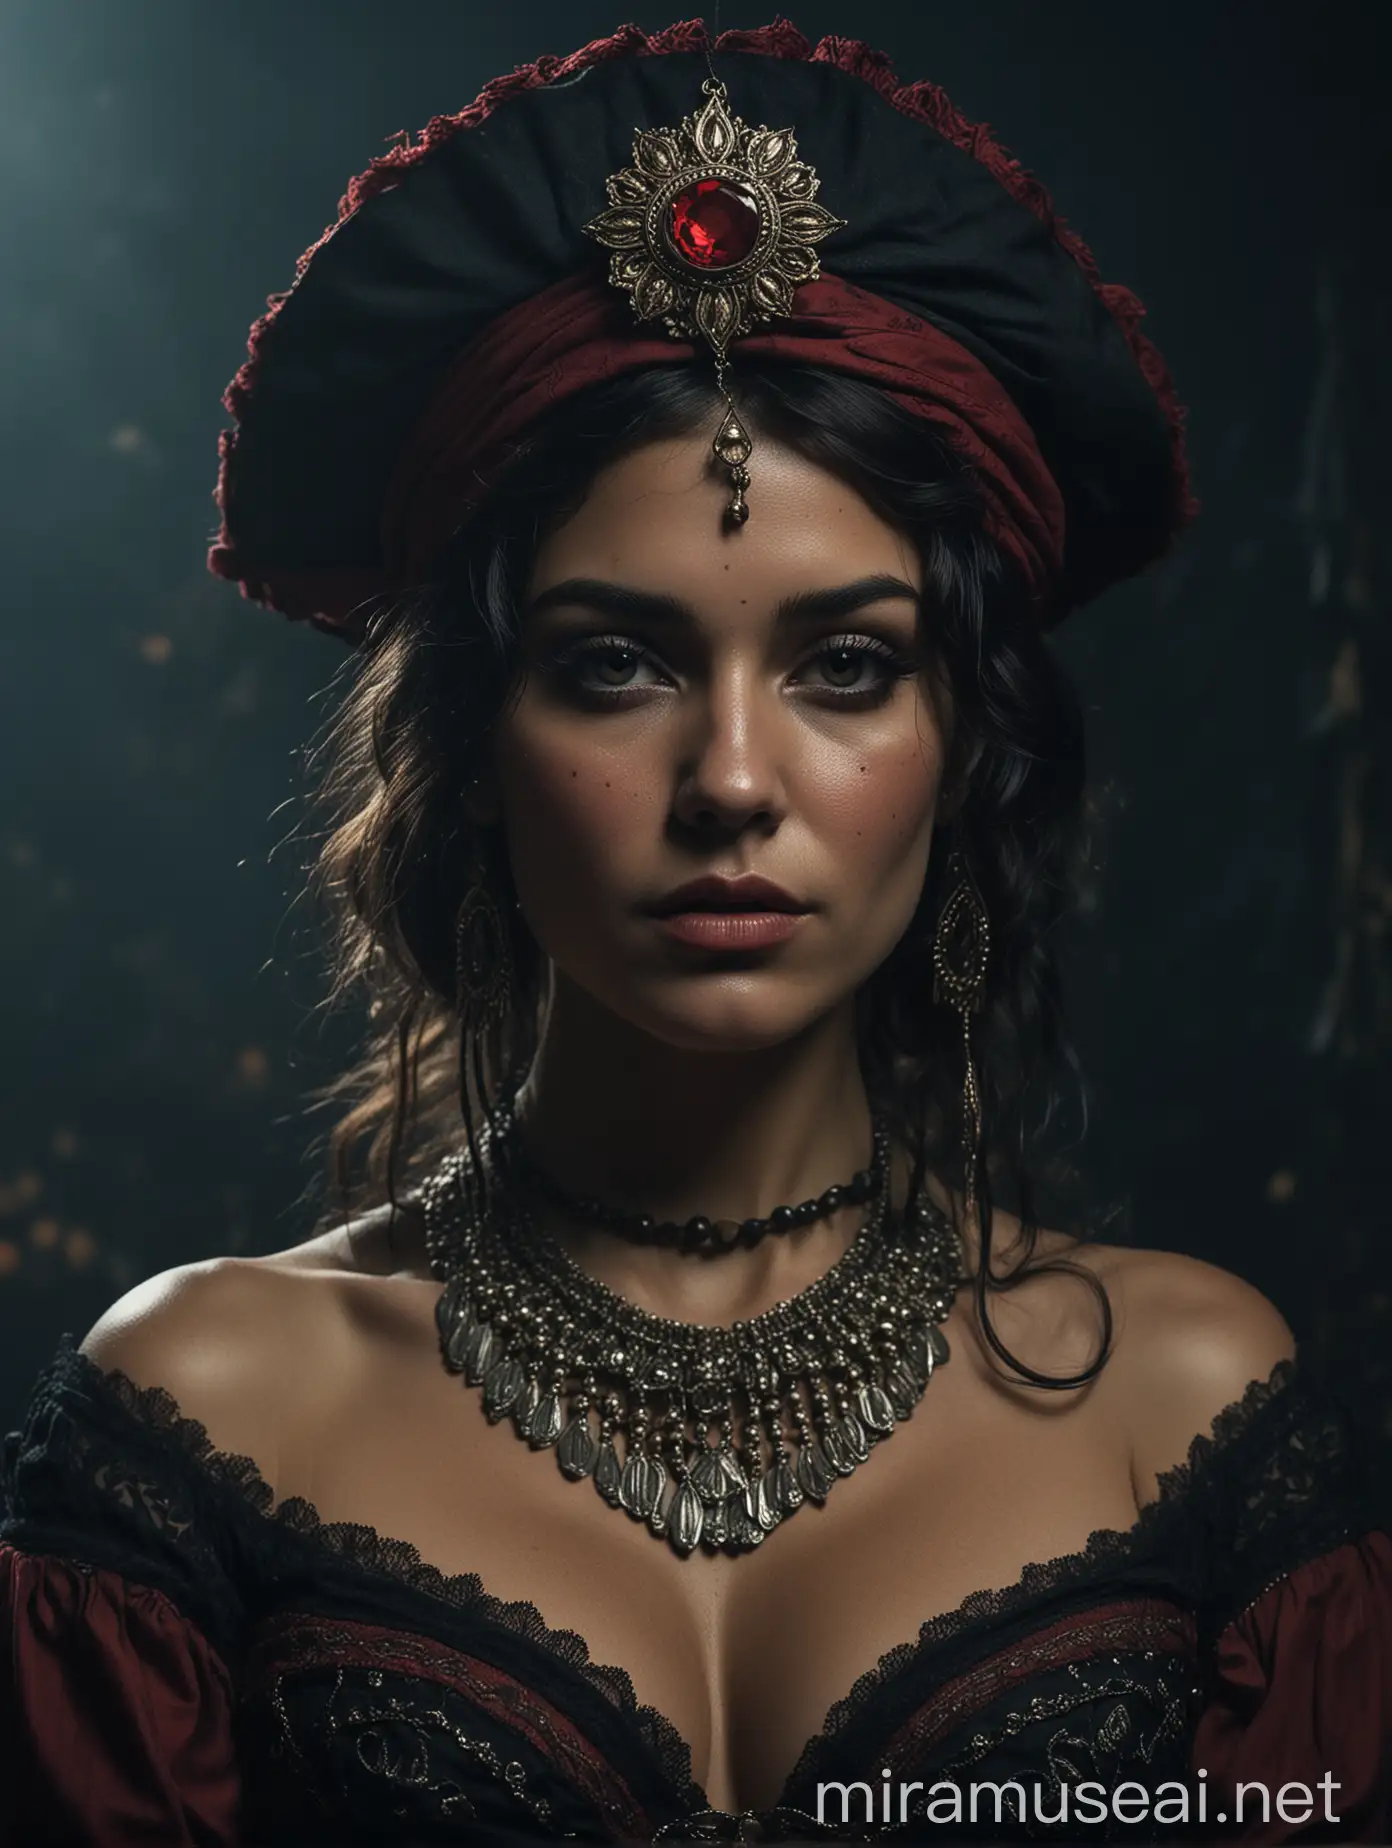 Mystical Gypsy Queen in Cinematic Portrait